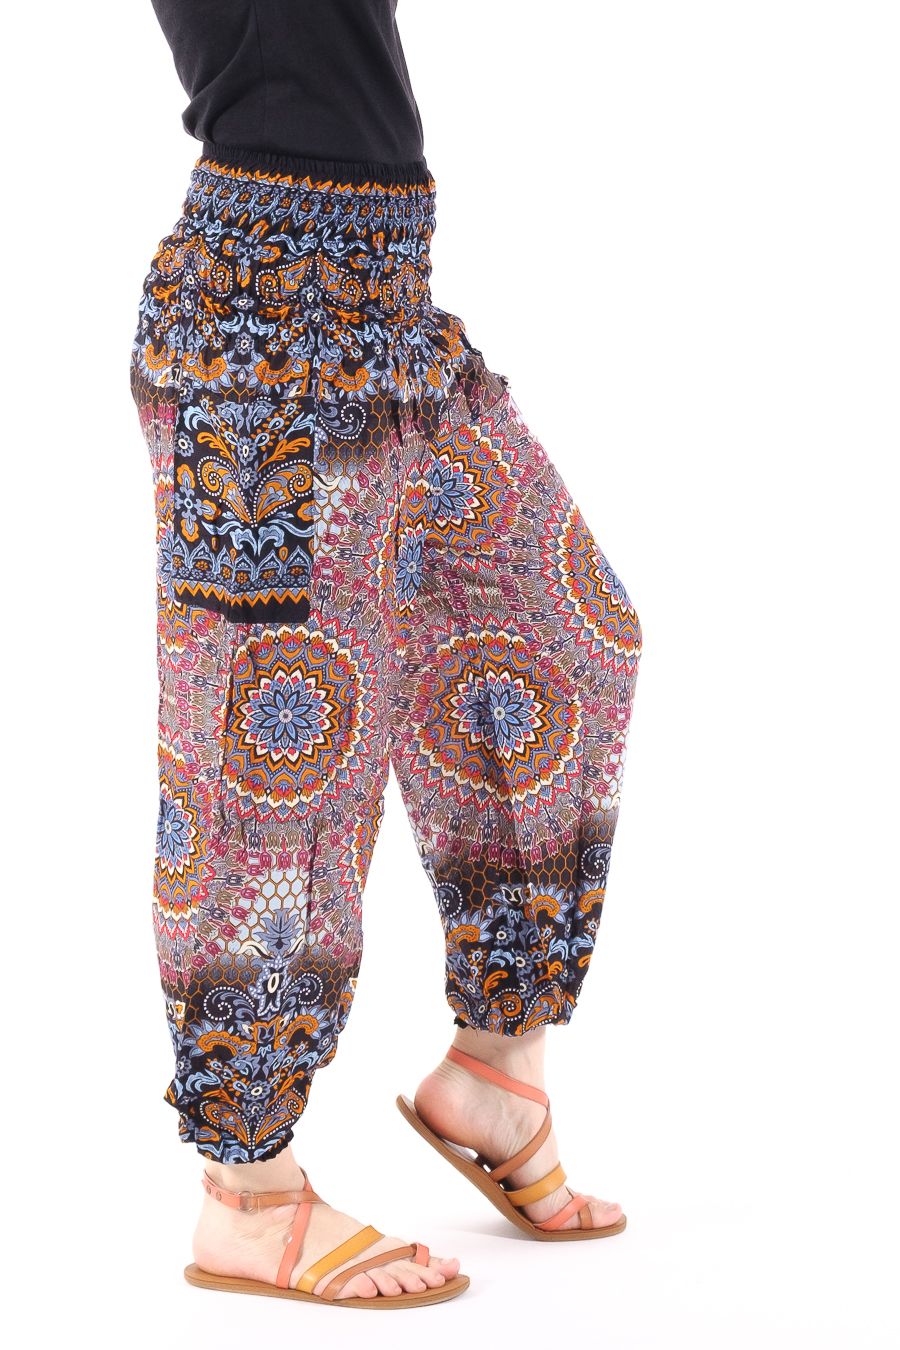 Turecké kalhoty sultánky FLOW viskóza Thajsko TT0043-01-058